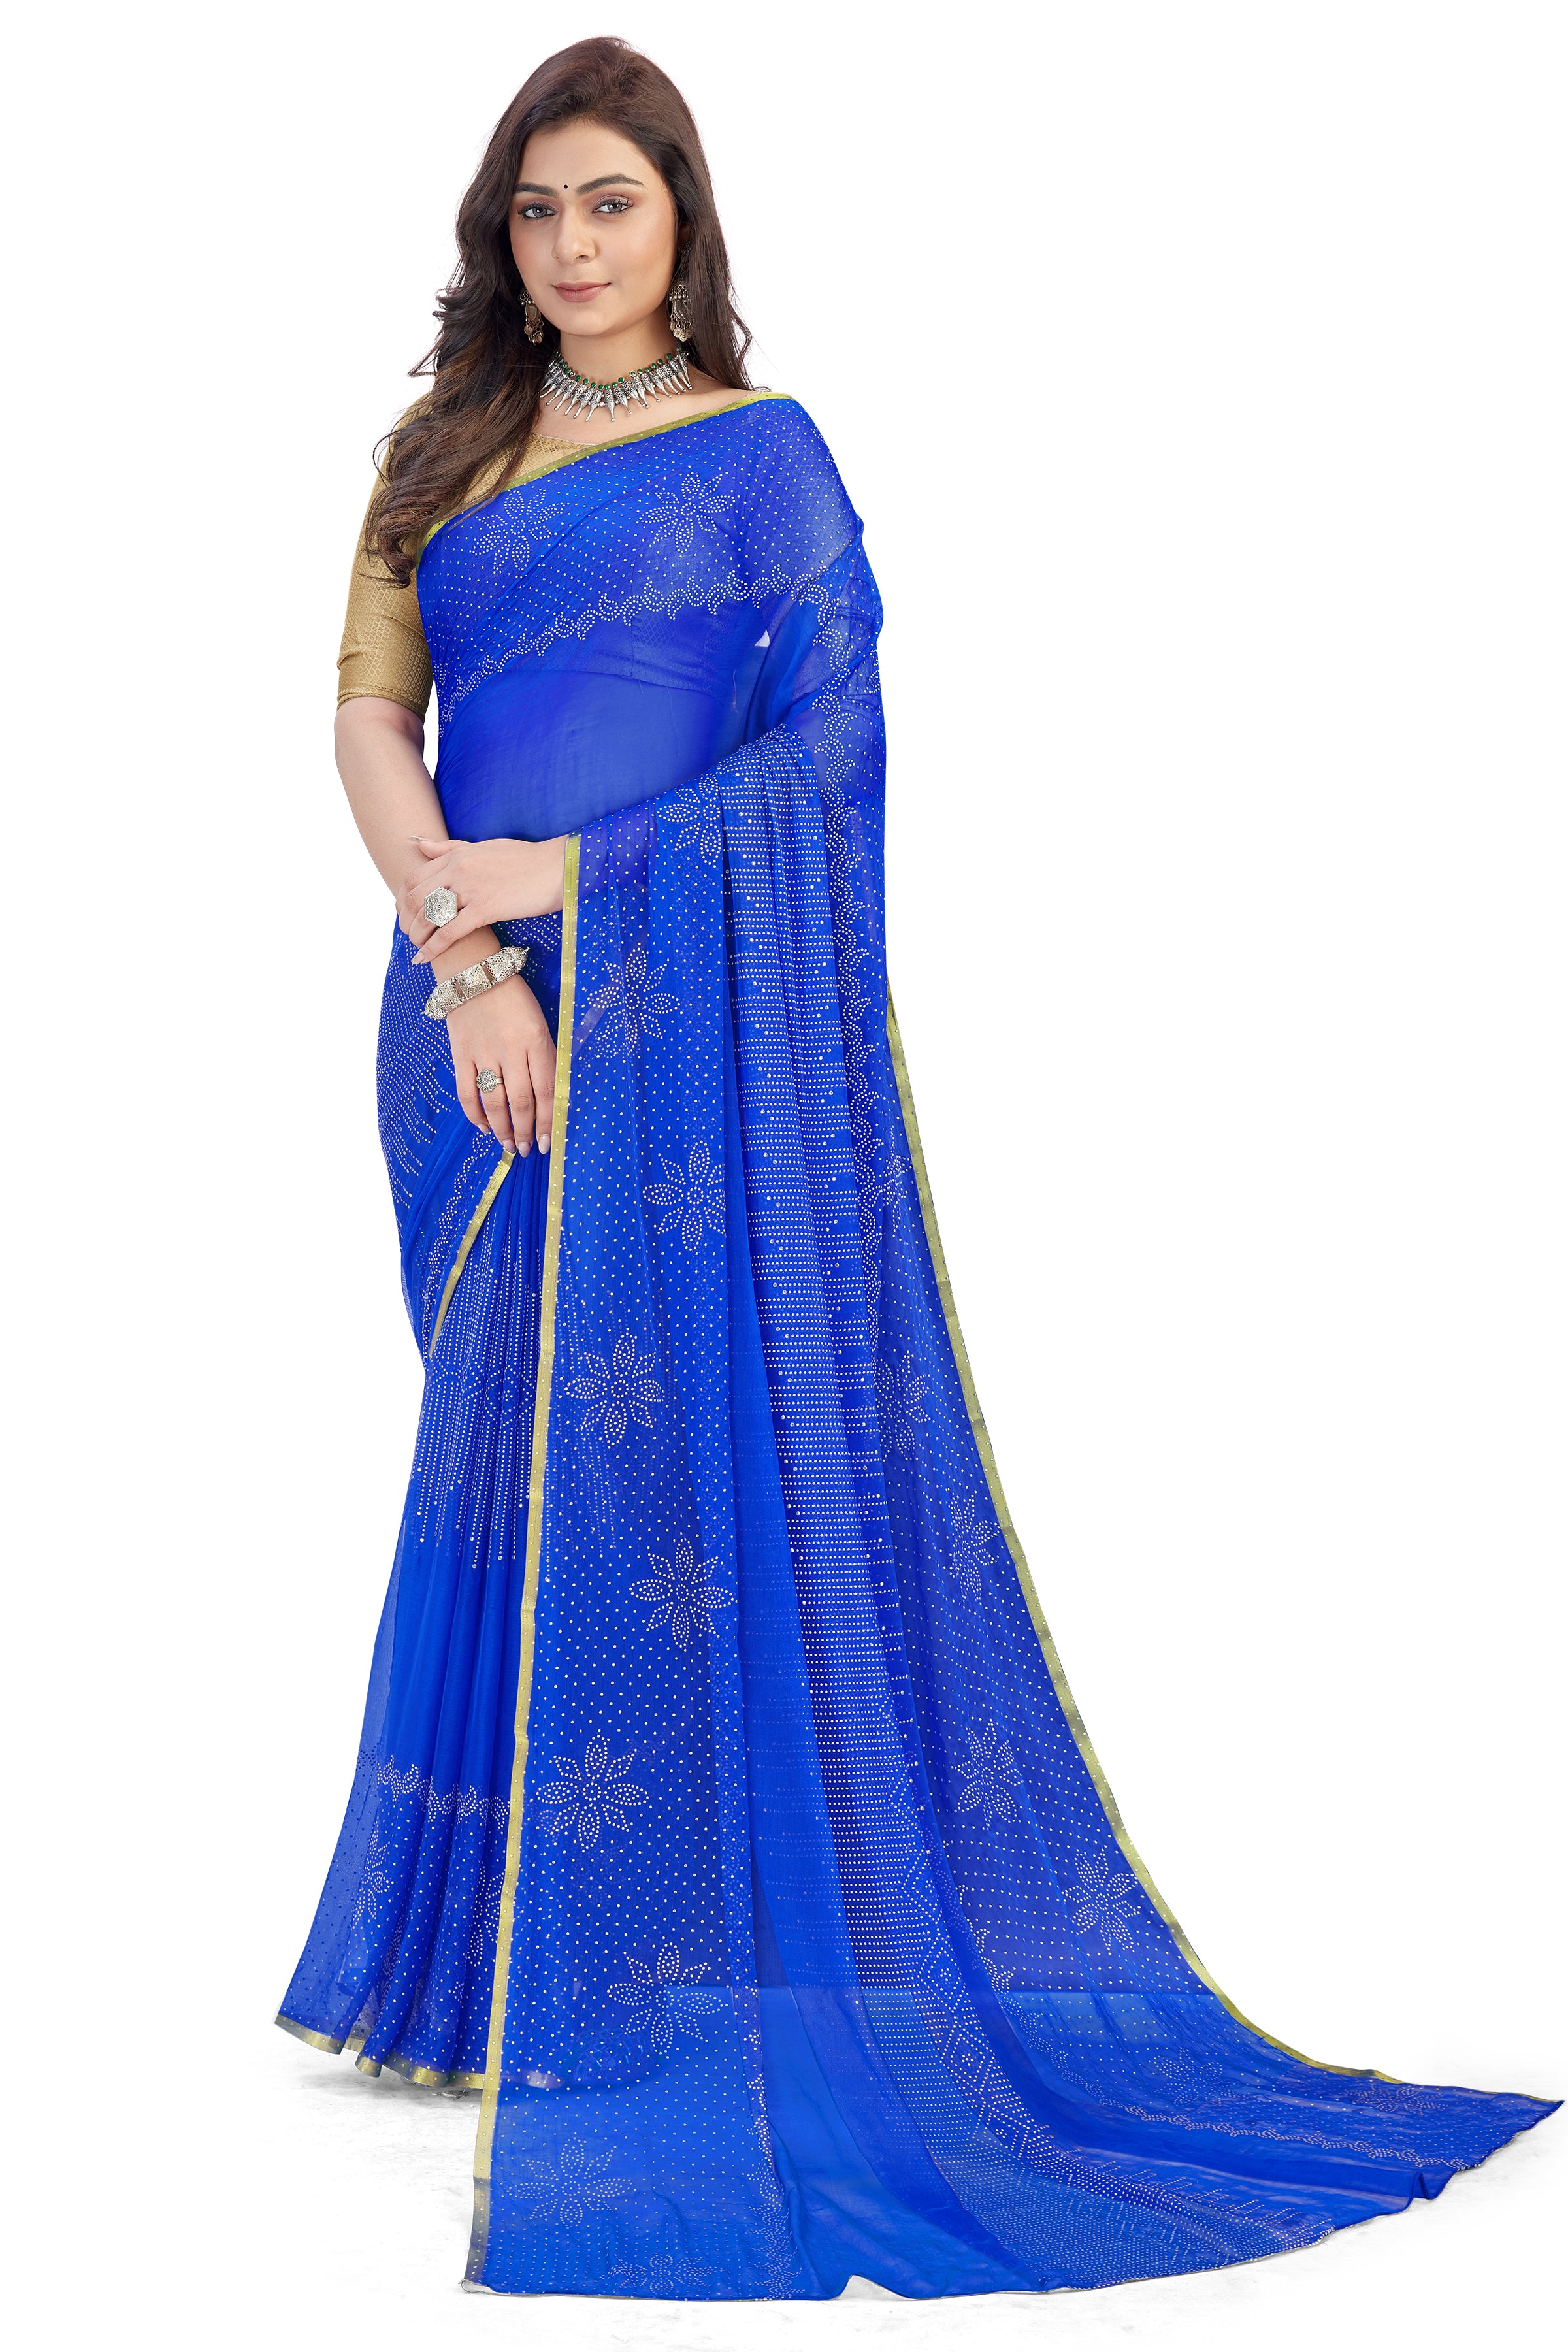 Women's Bandhani Daily Wear Chiffon Sari With Blouse Piece (Royal Blue) - NIMIDHYA